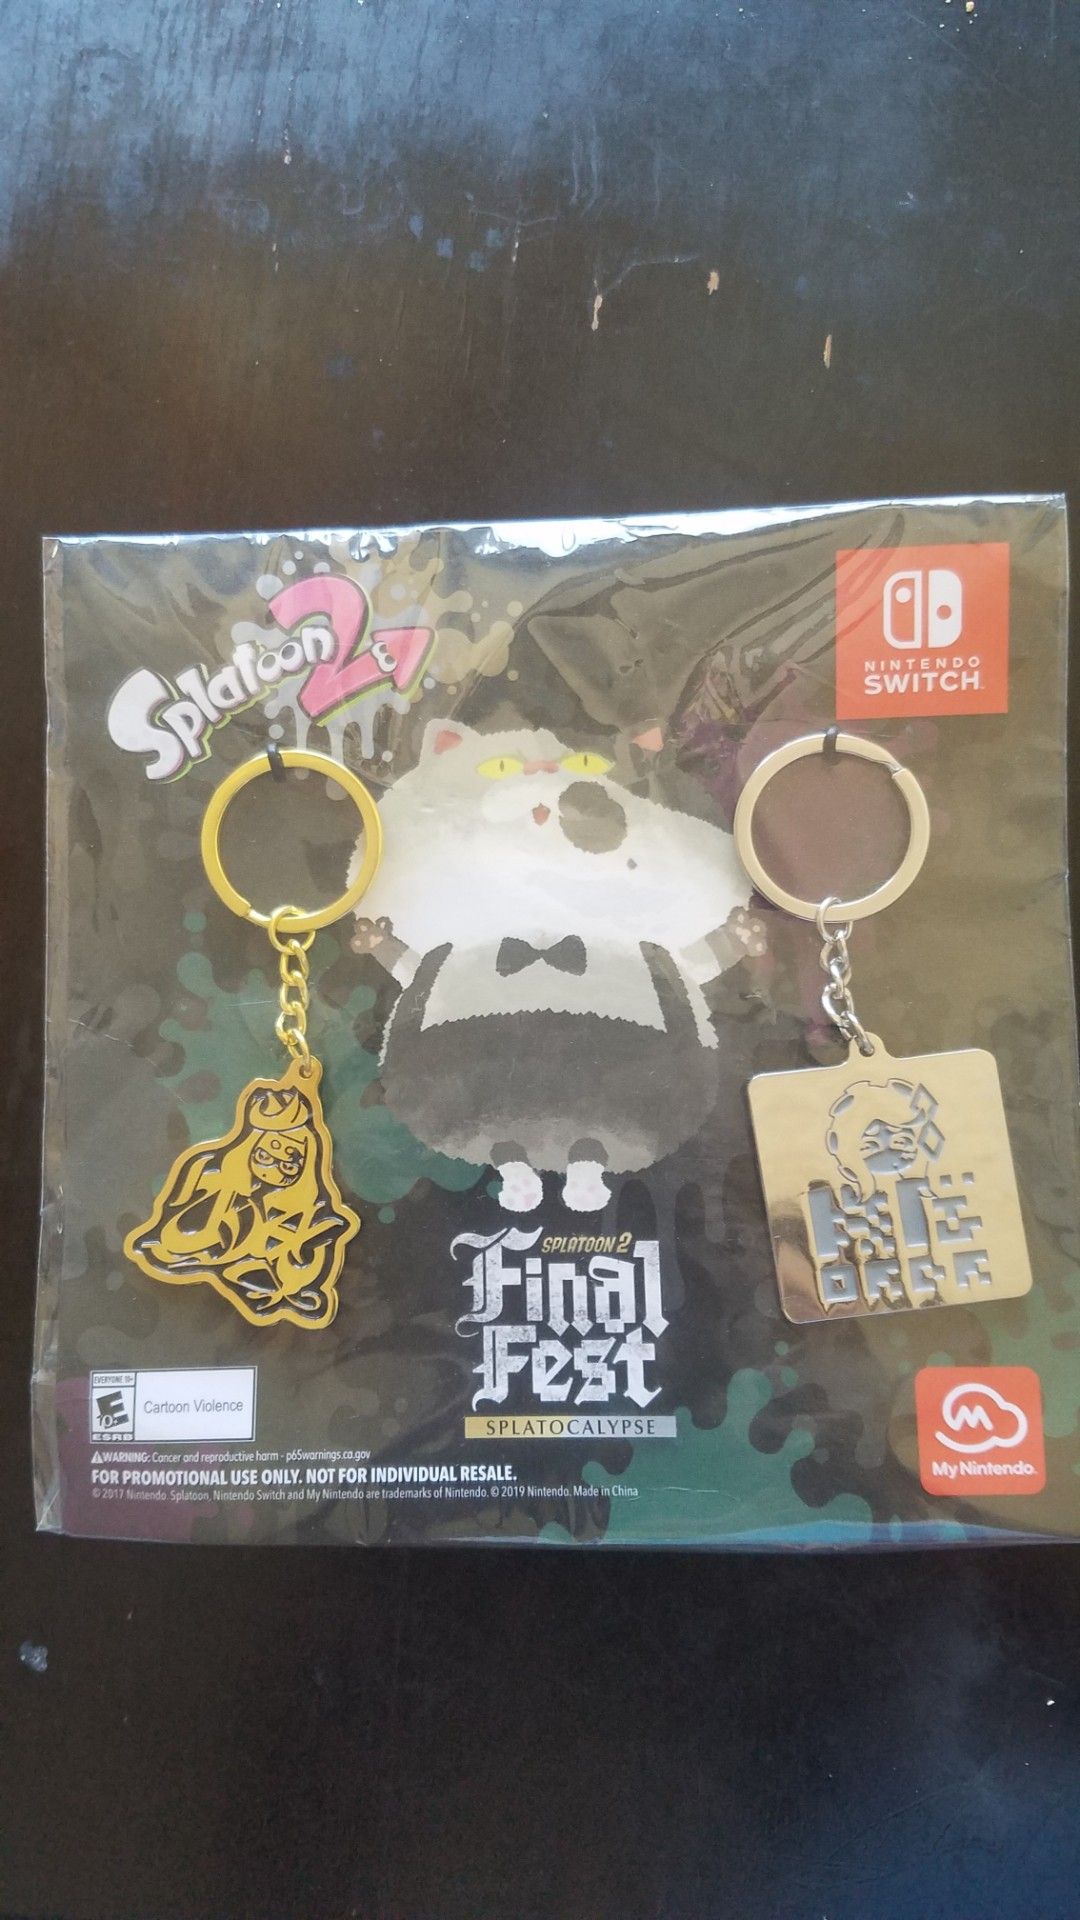 Splatoon 2 Final Fest Comic Con My Nintendo exclusive keychains